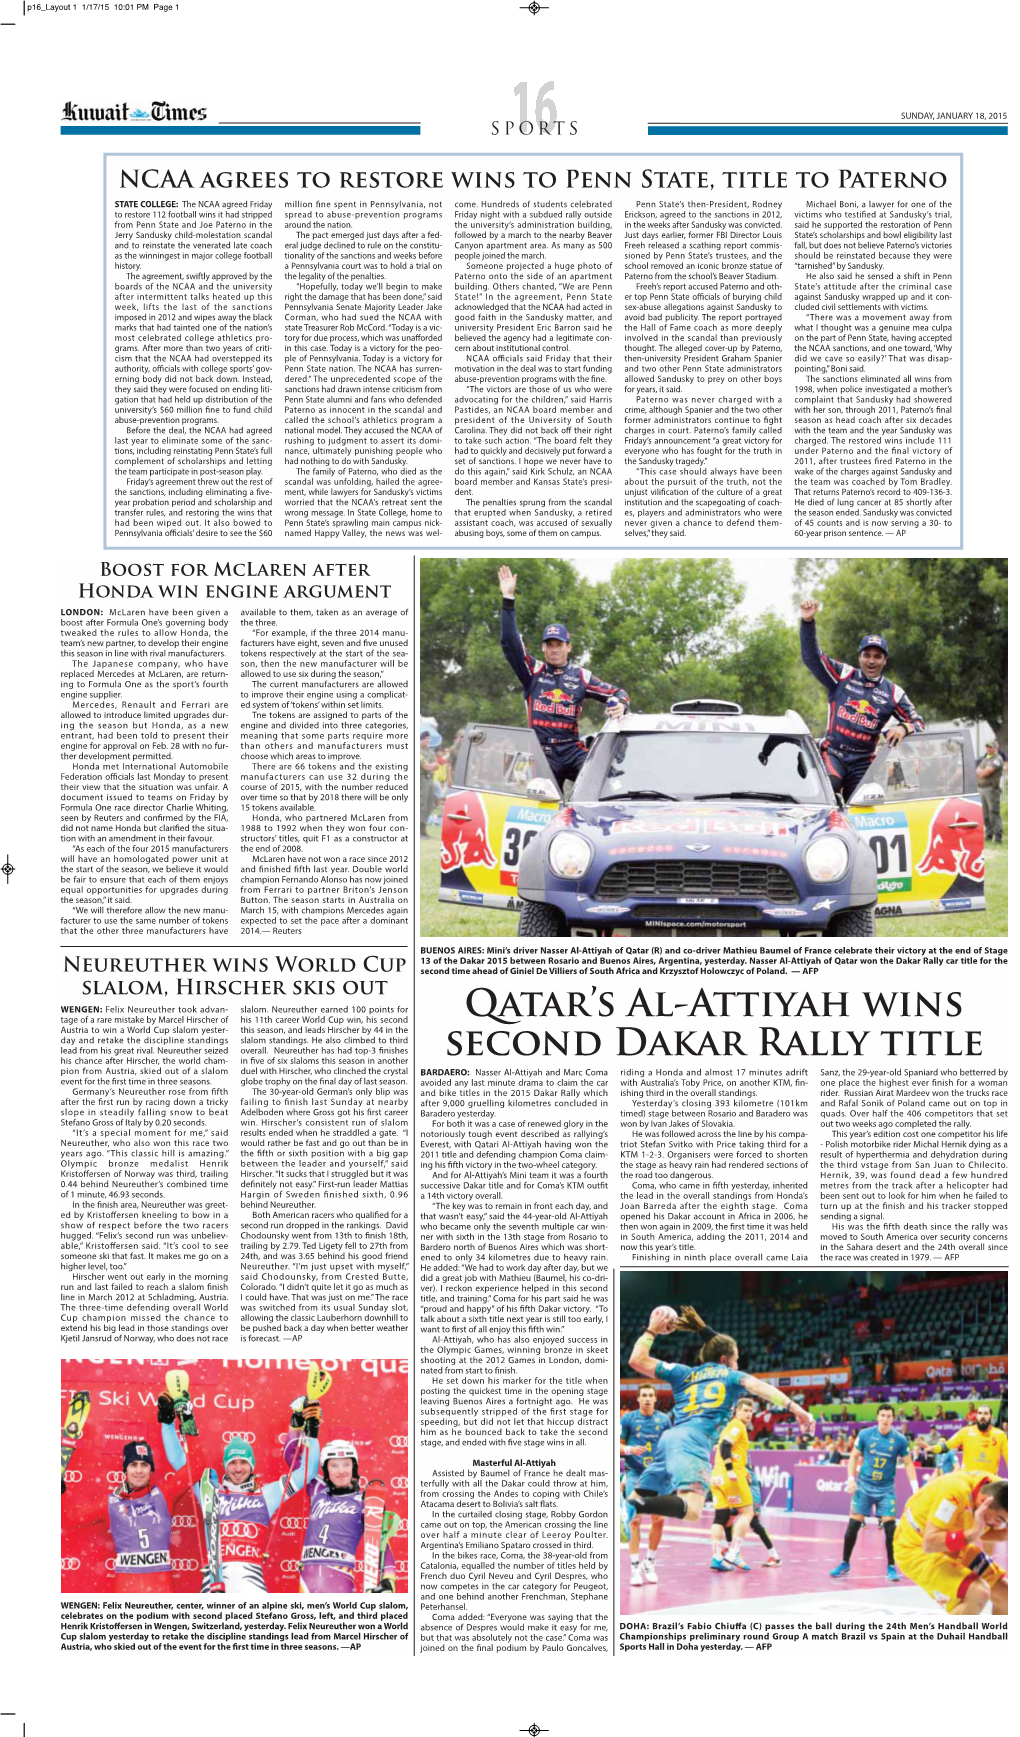 Qatar's Al-Attiyah Wins Second Dakar Rally Title